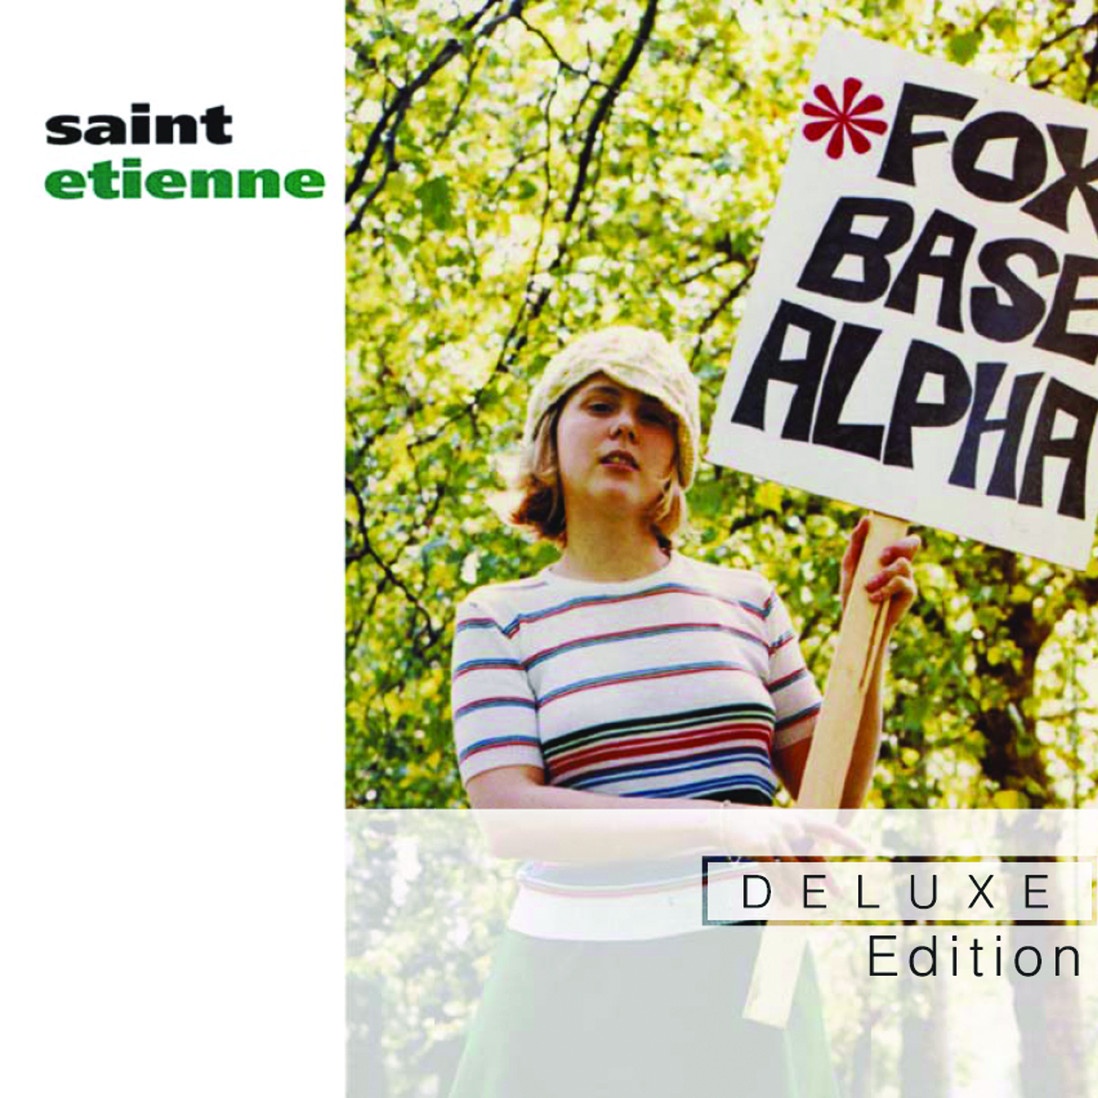 Foxbase Alpha (Deluxe Edition)